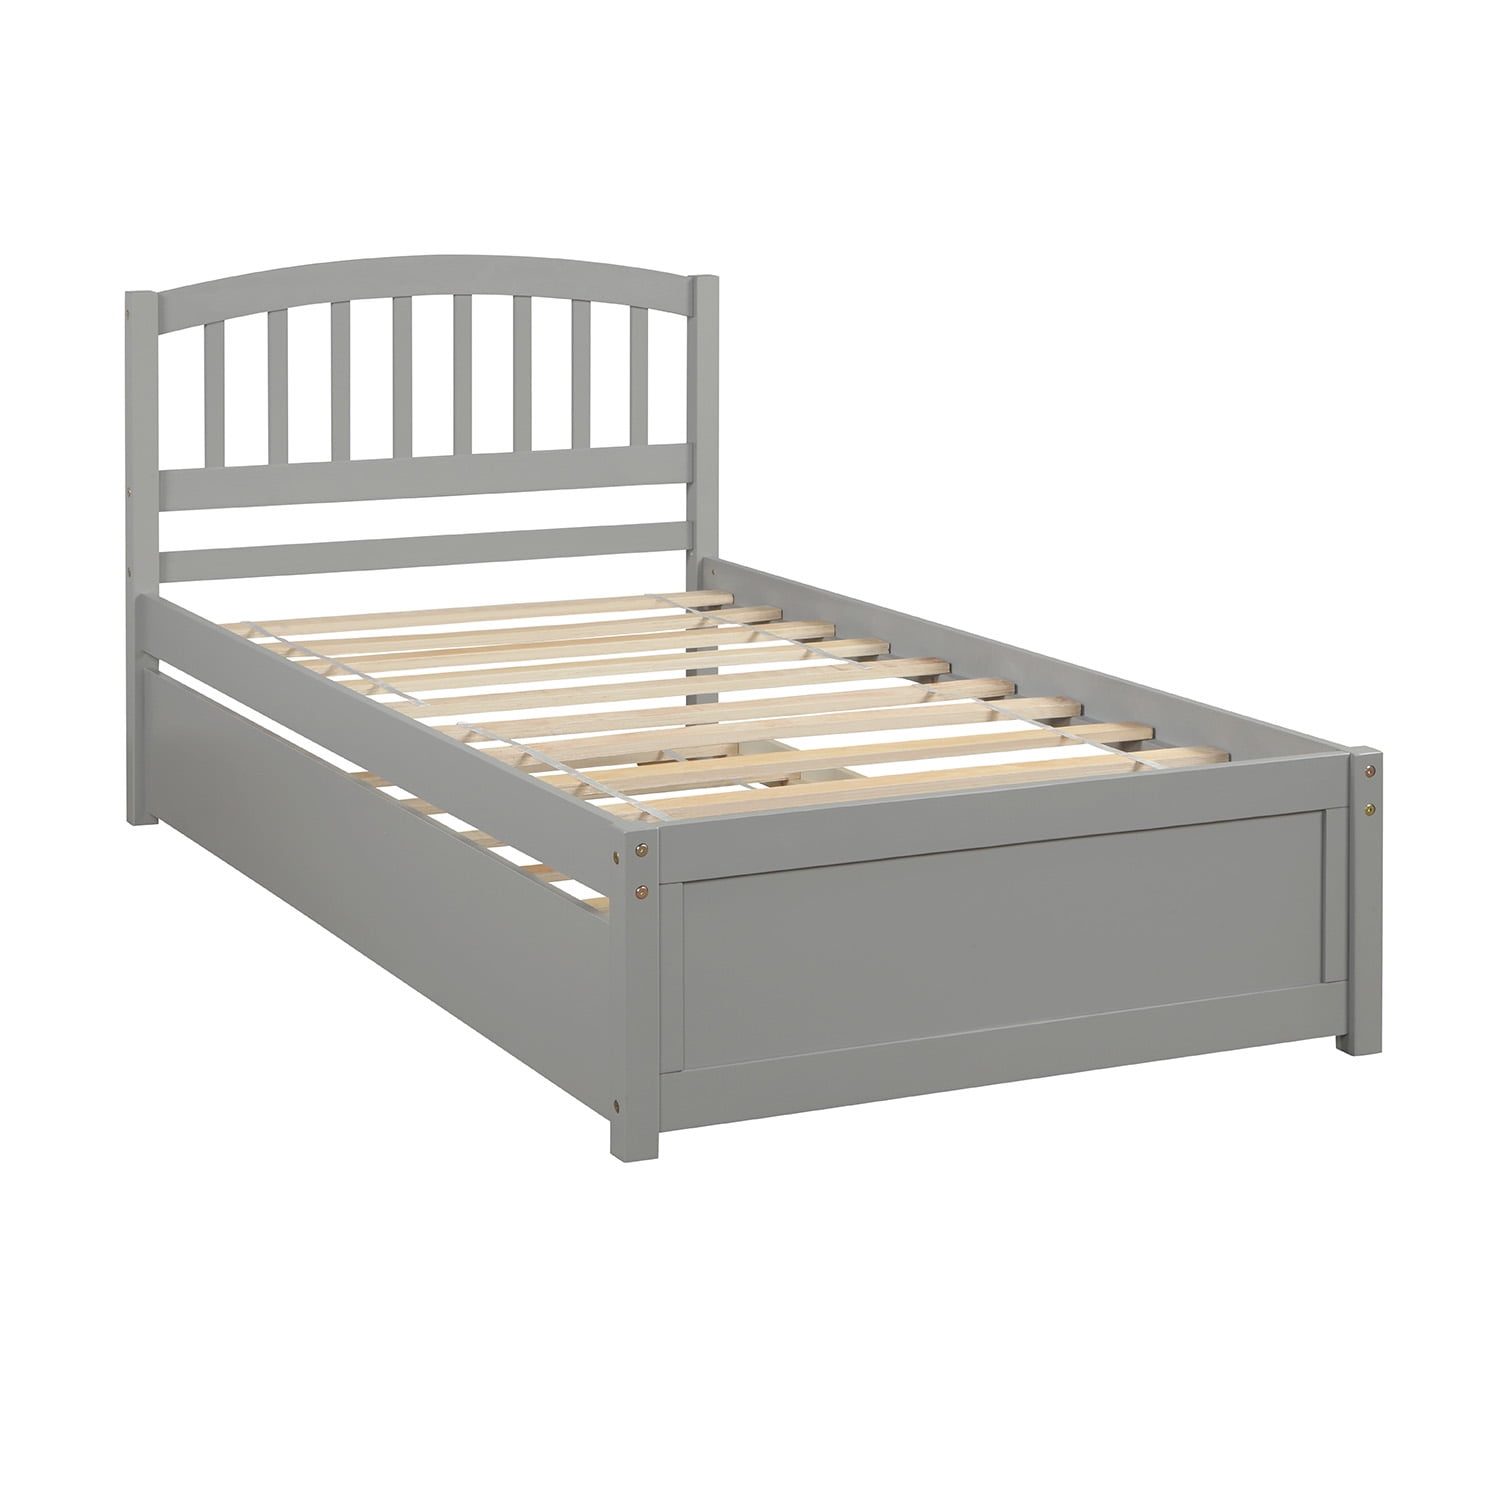 Twin size Platform Bed Wood Bed Frame w/Trundle Wood Slats Home Furniture Gray 